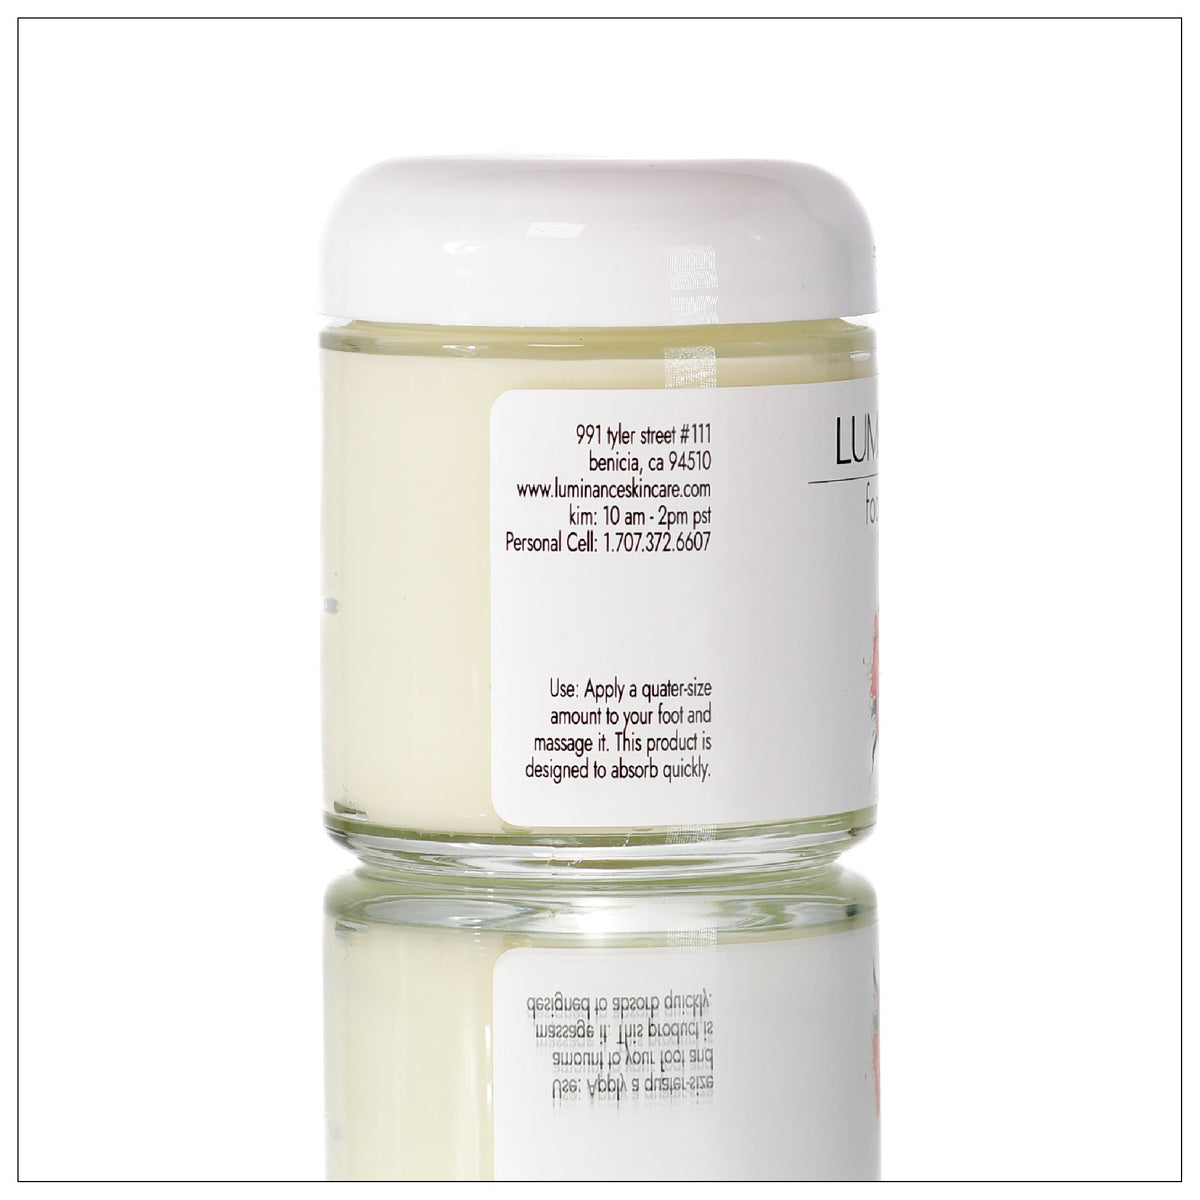 Clean Foot Cream. 100% Plant Based. Organic. - Luminance Skincare